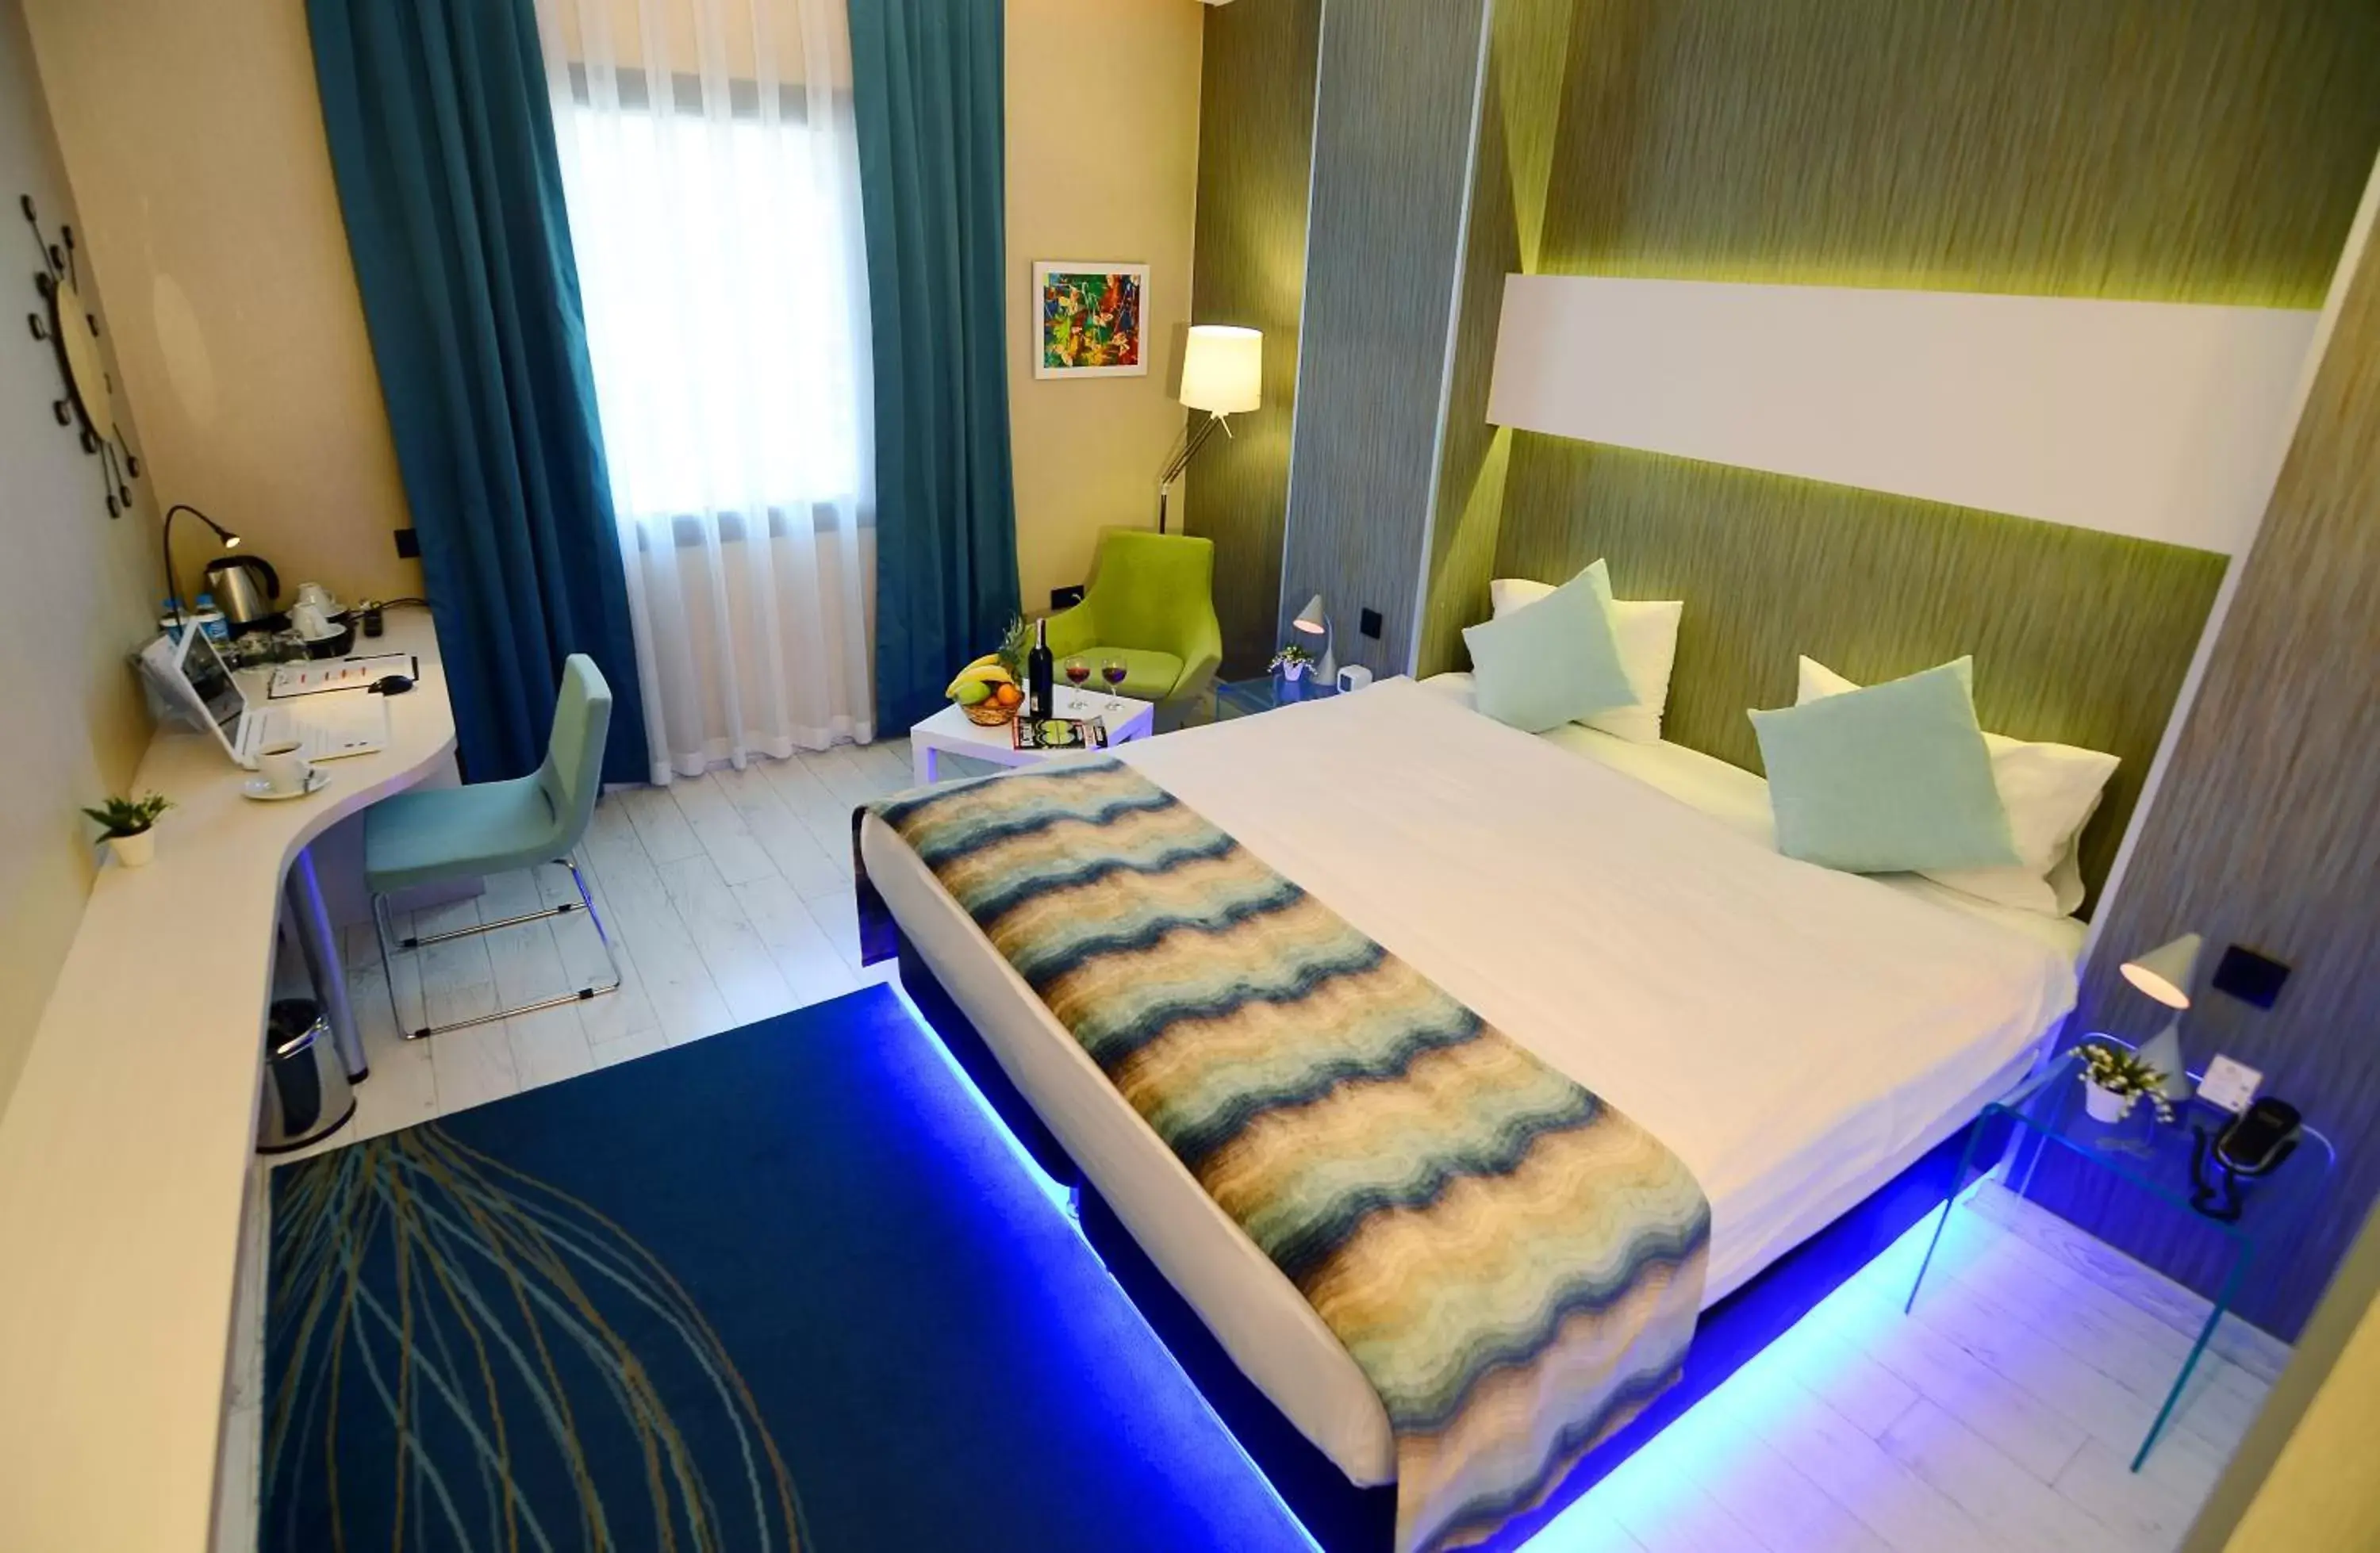 Bed in Tempo Hotel 4Levent